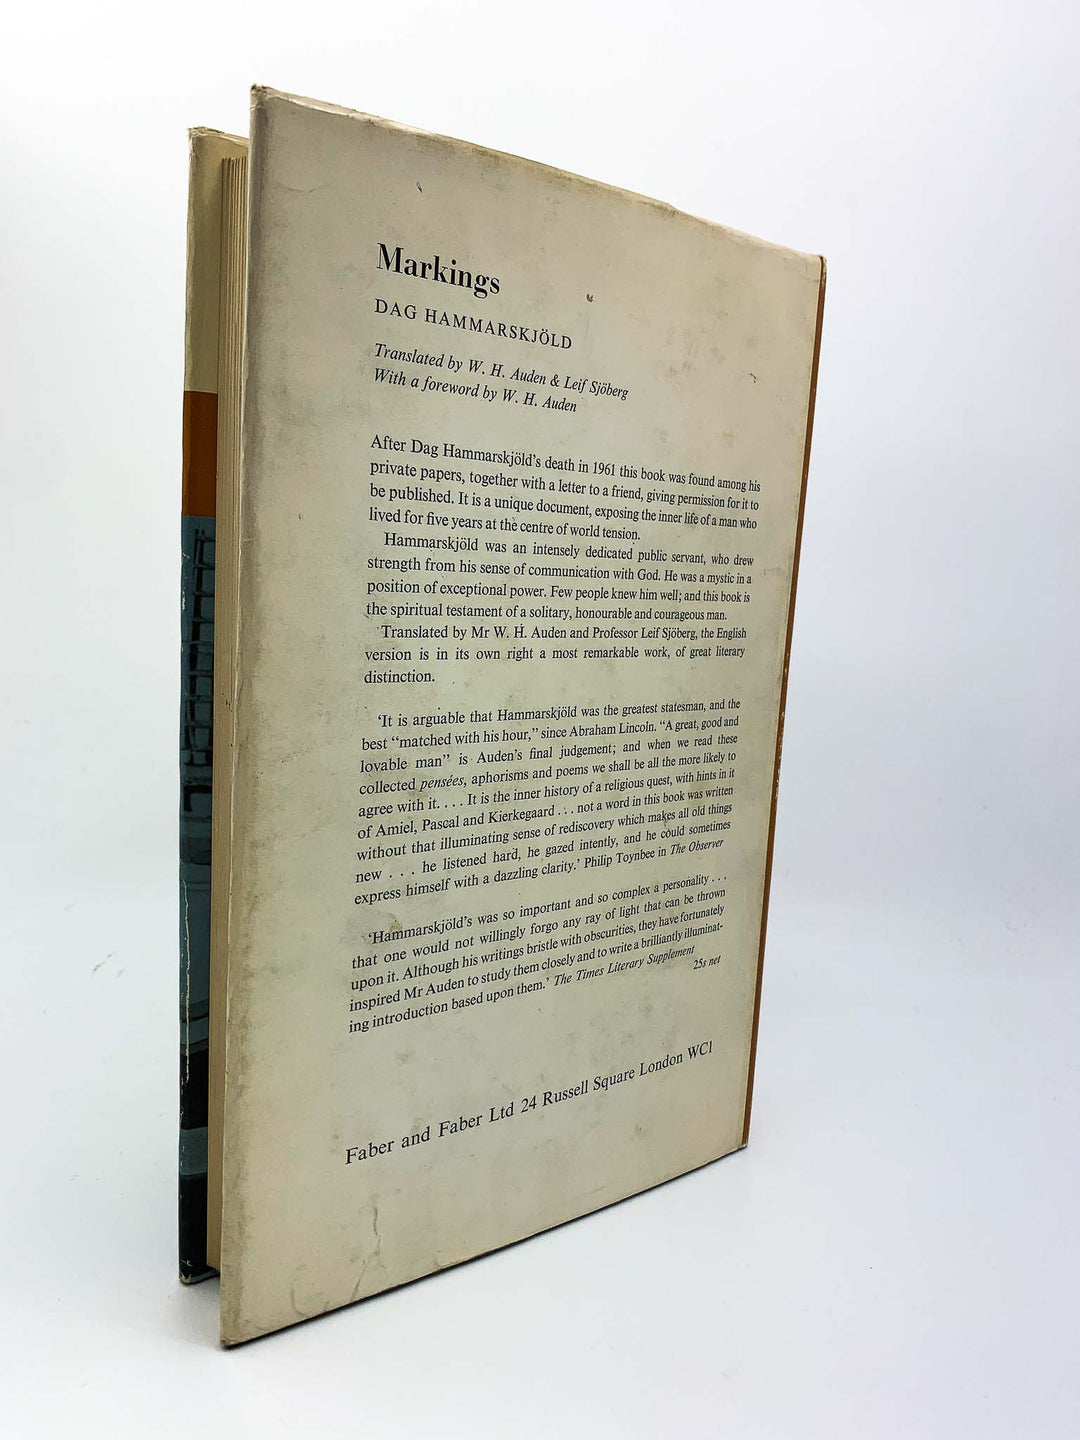 van Dusen, Henry P - Dag Hammarskjold : A Biographical Interpretation of Markings | back cover